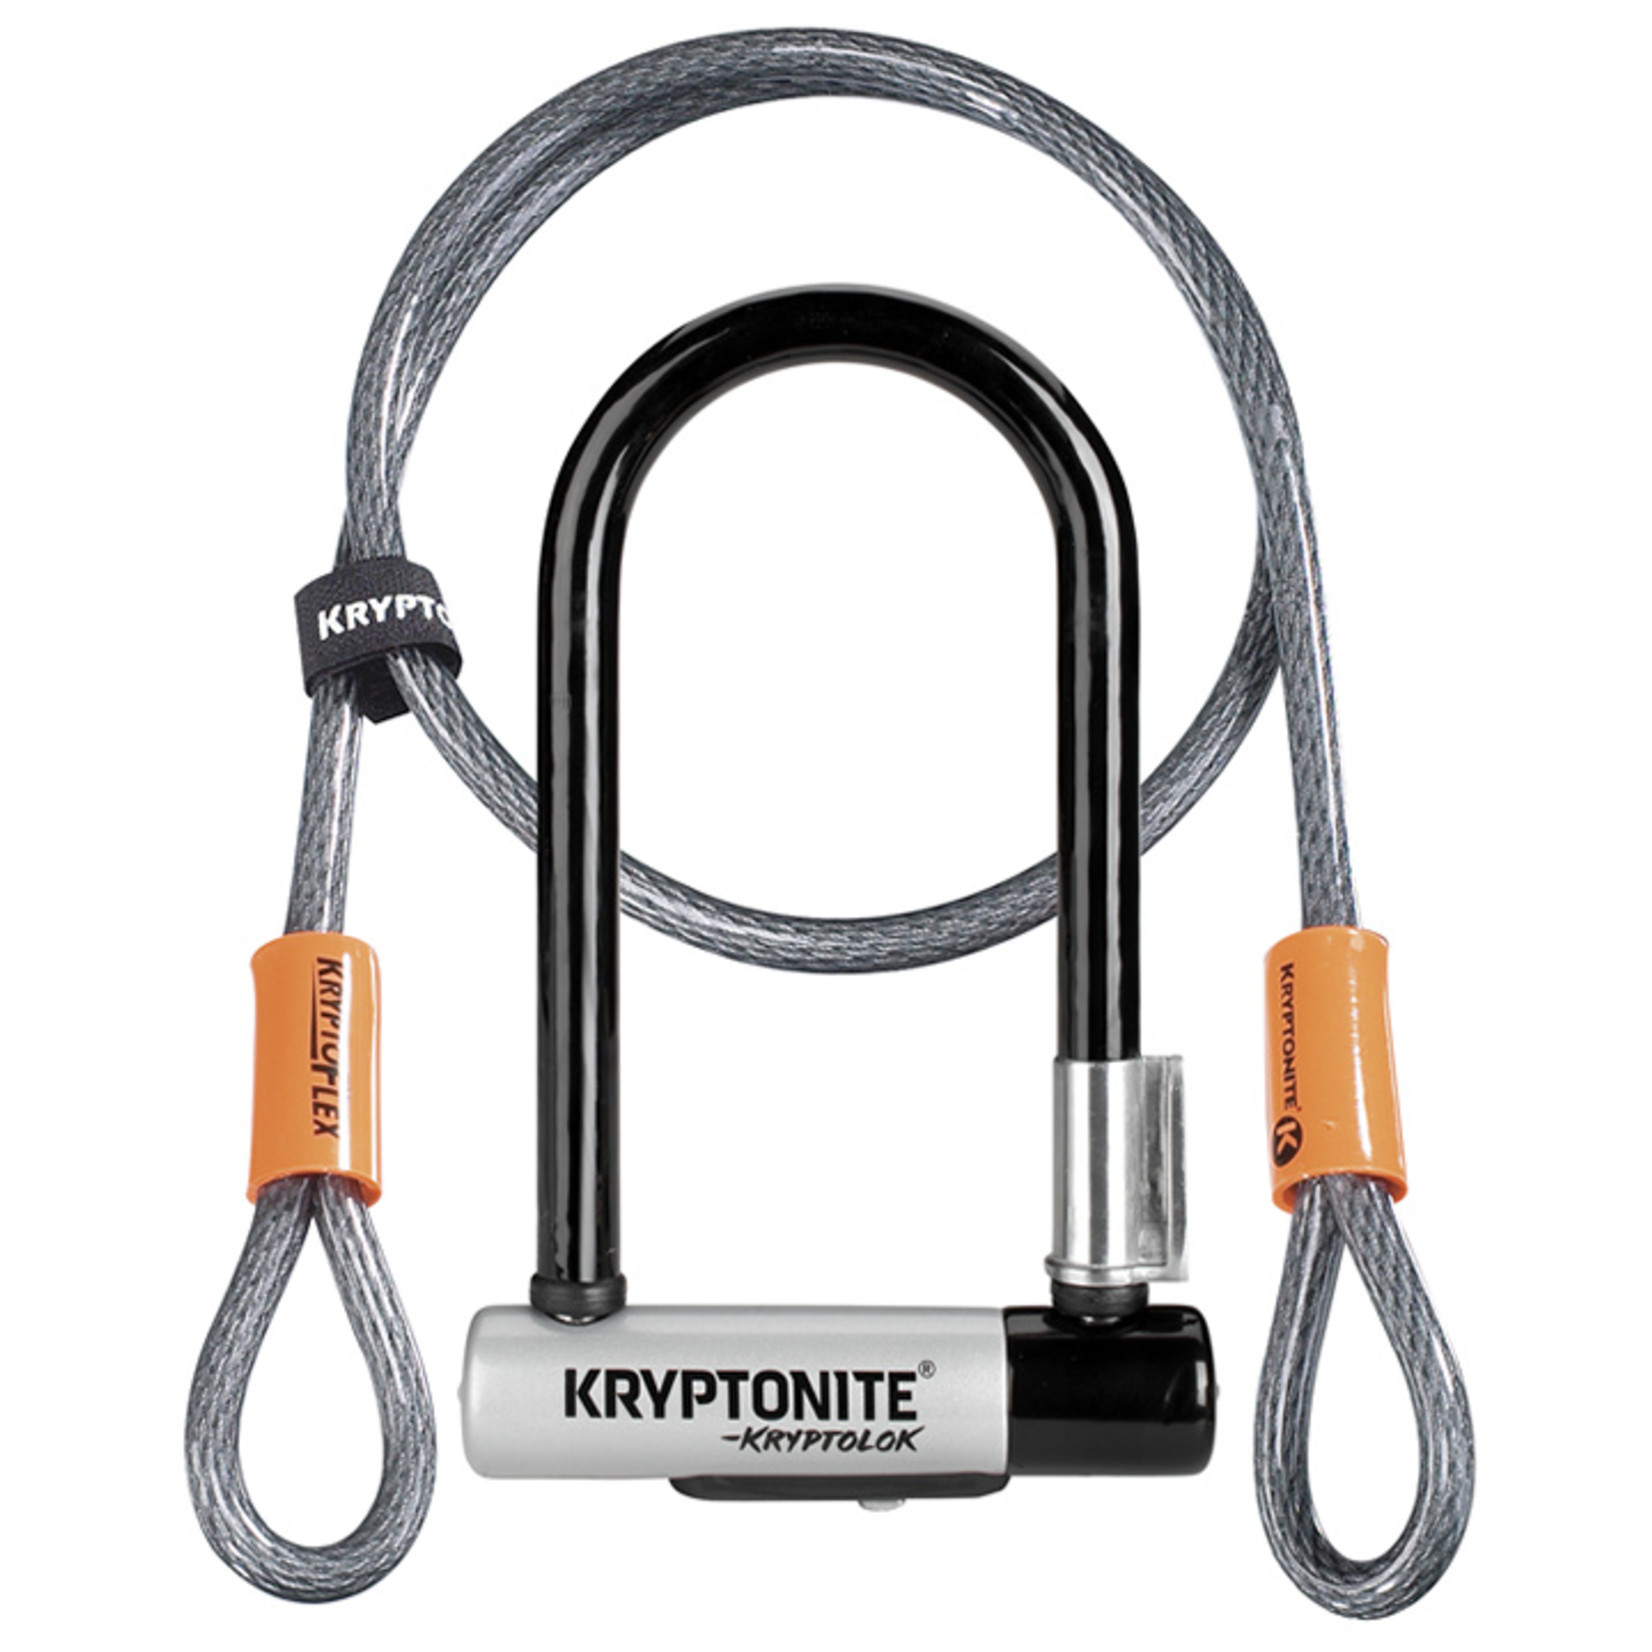 Kryptonite Kryptolok Mini-7 with Flex Cable